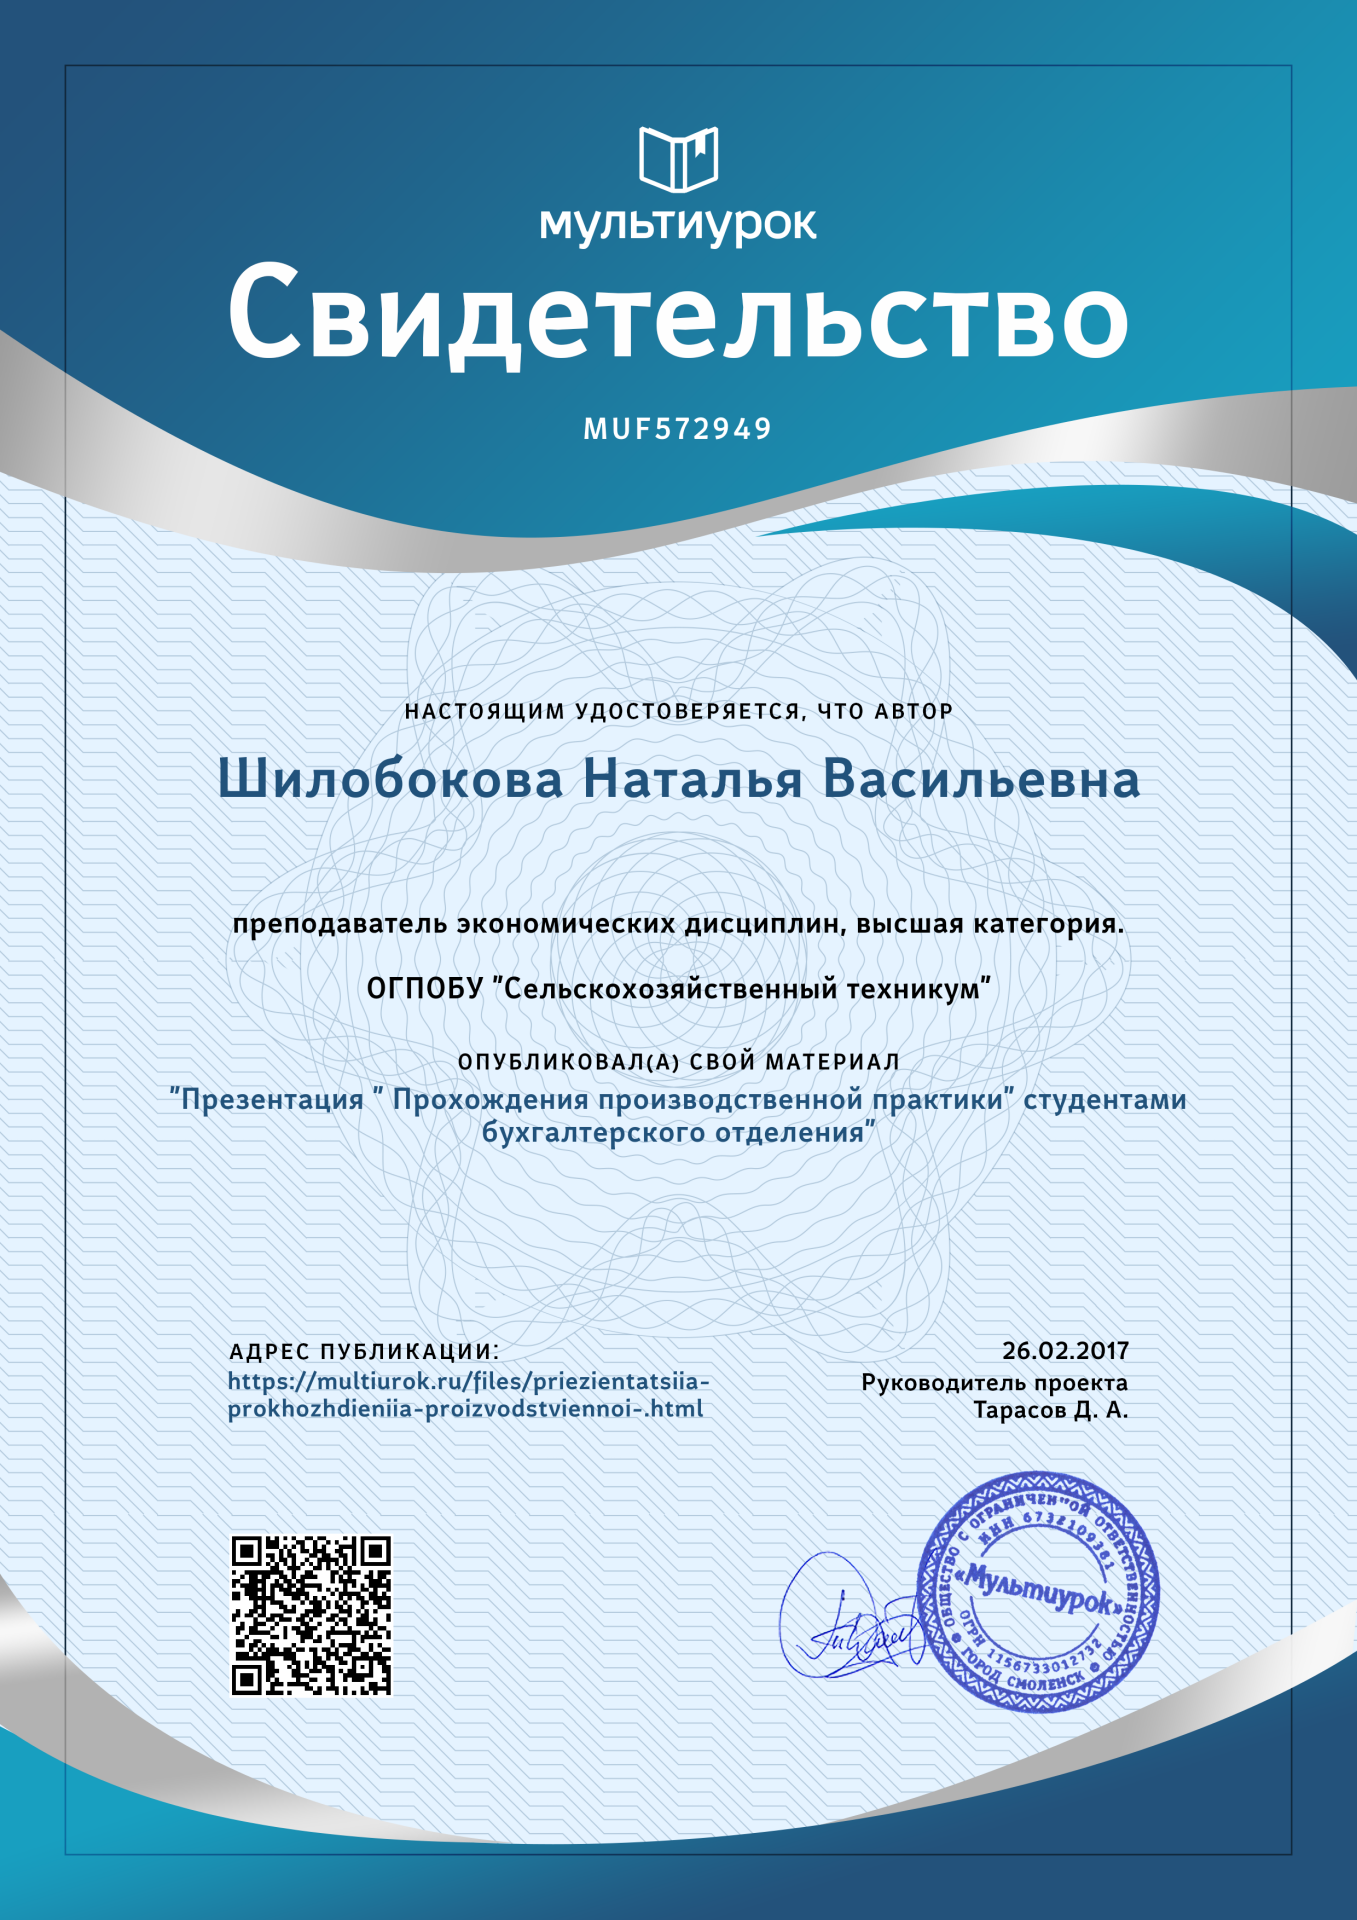 Мультиурок сертификат